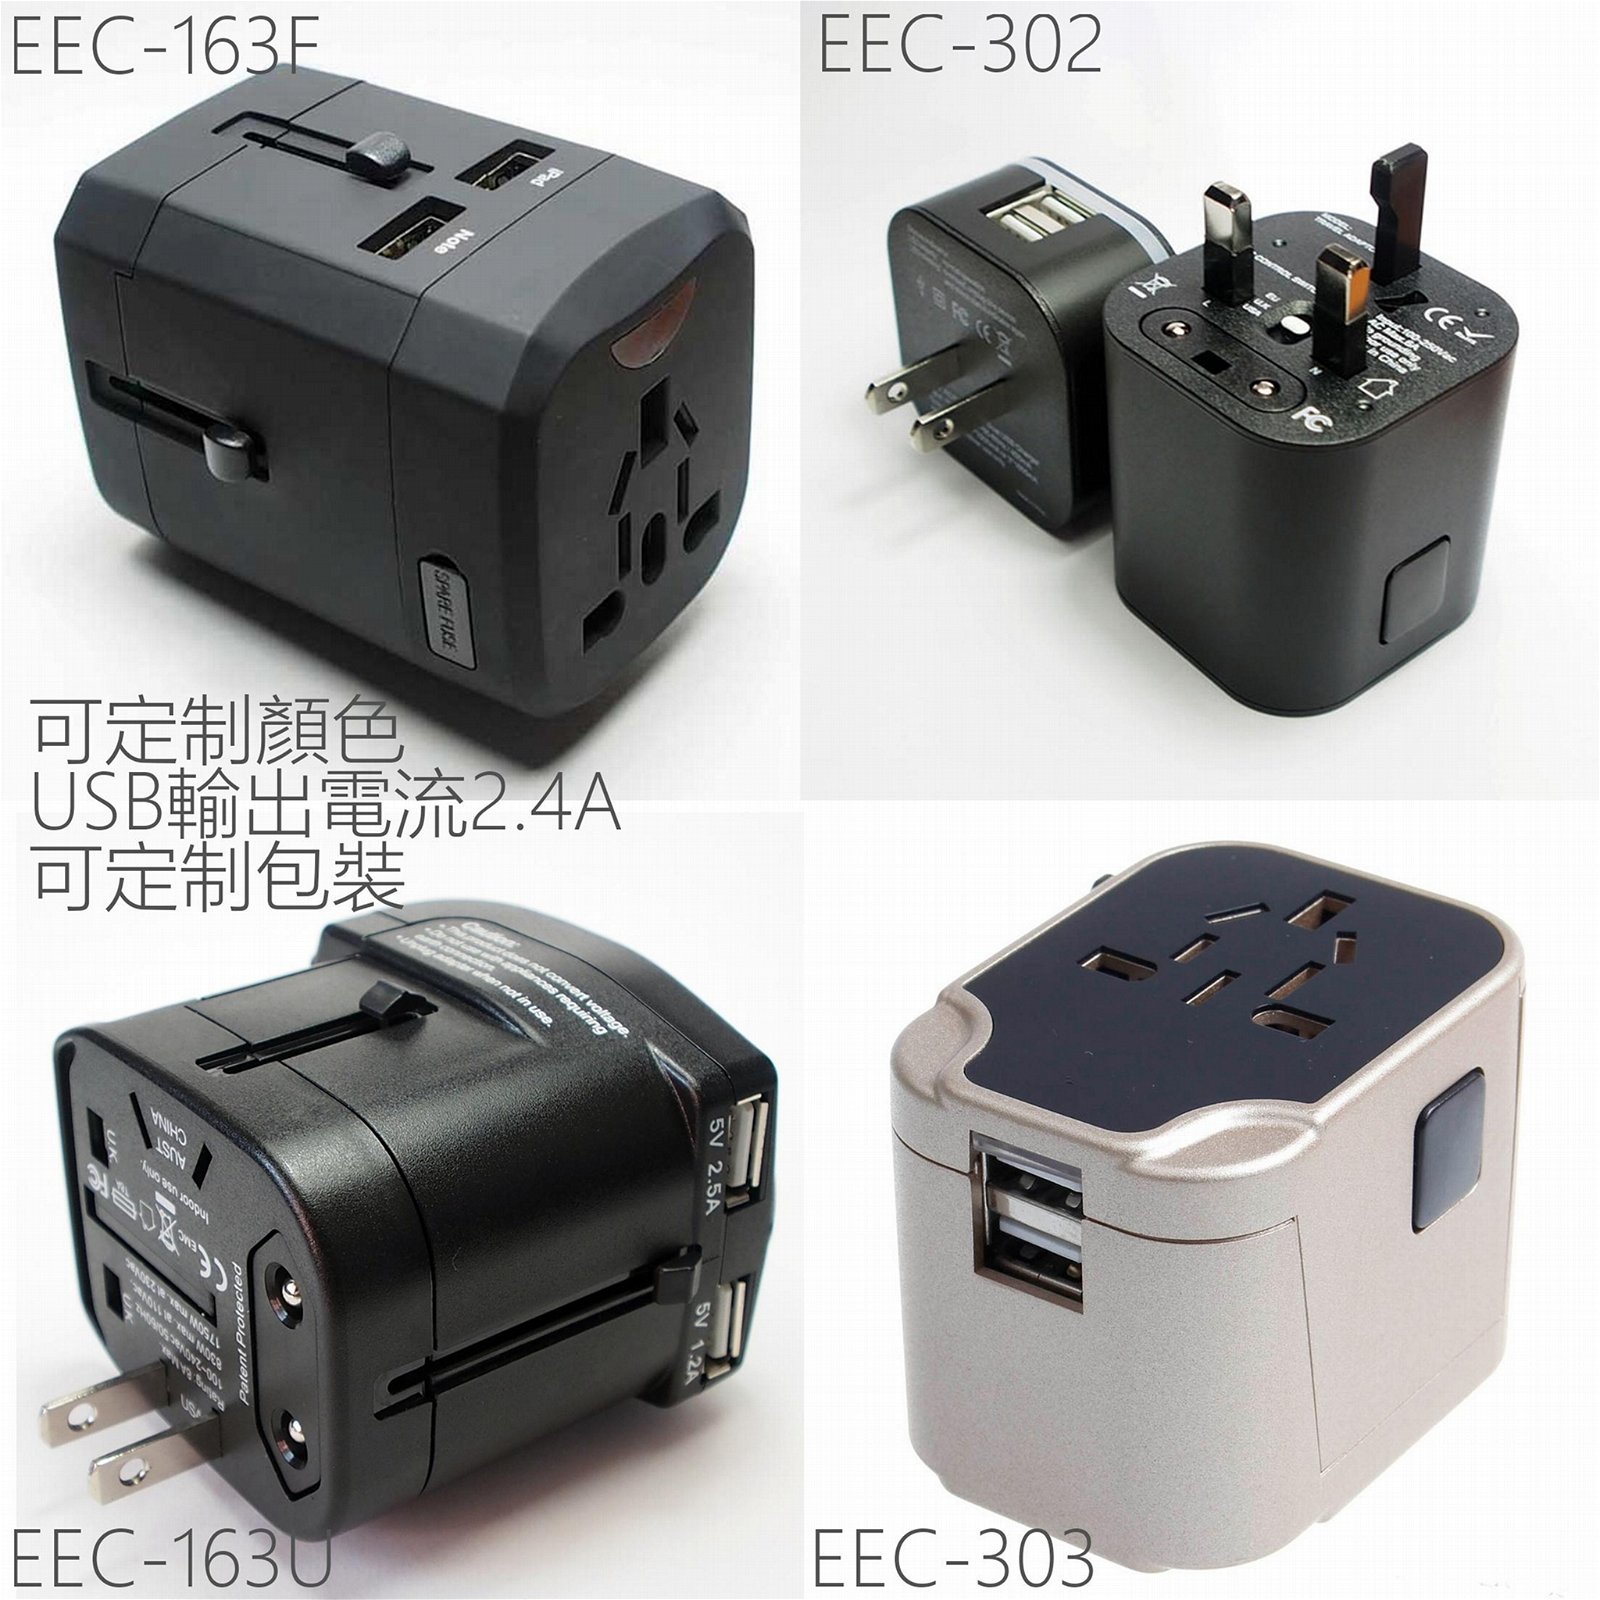 2.4A Universal Travel Adapter for travel  EC-163U,302, 303,163F,